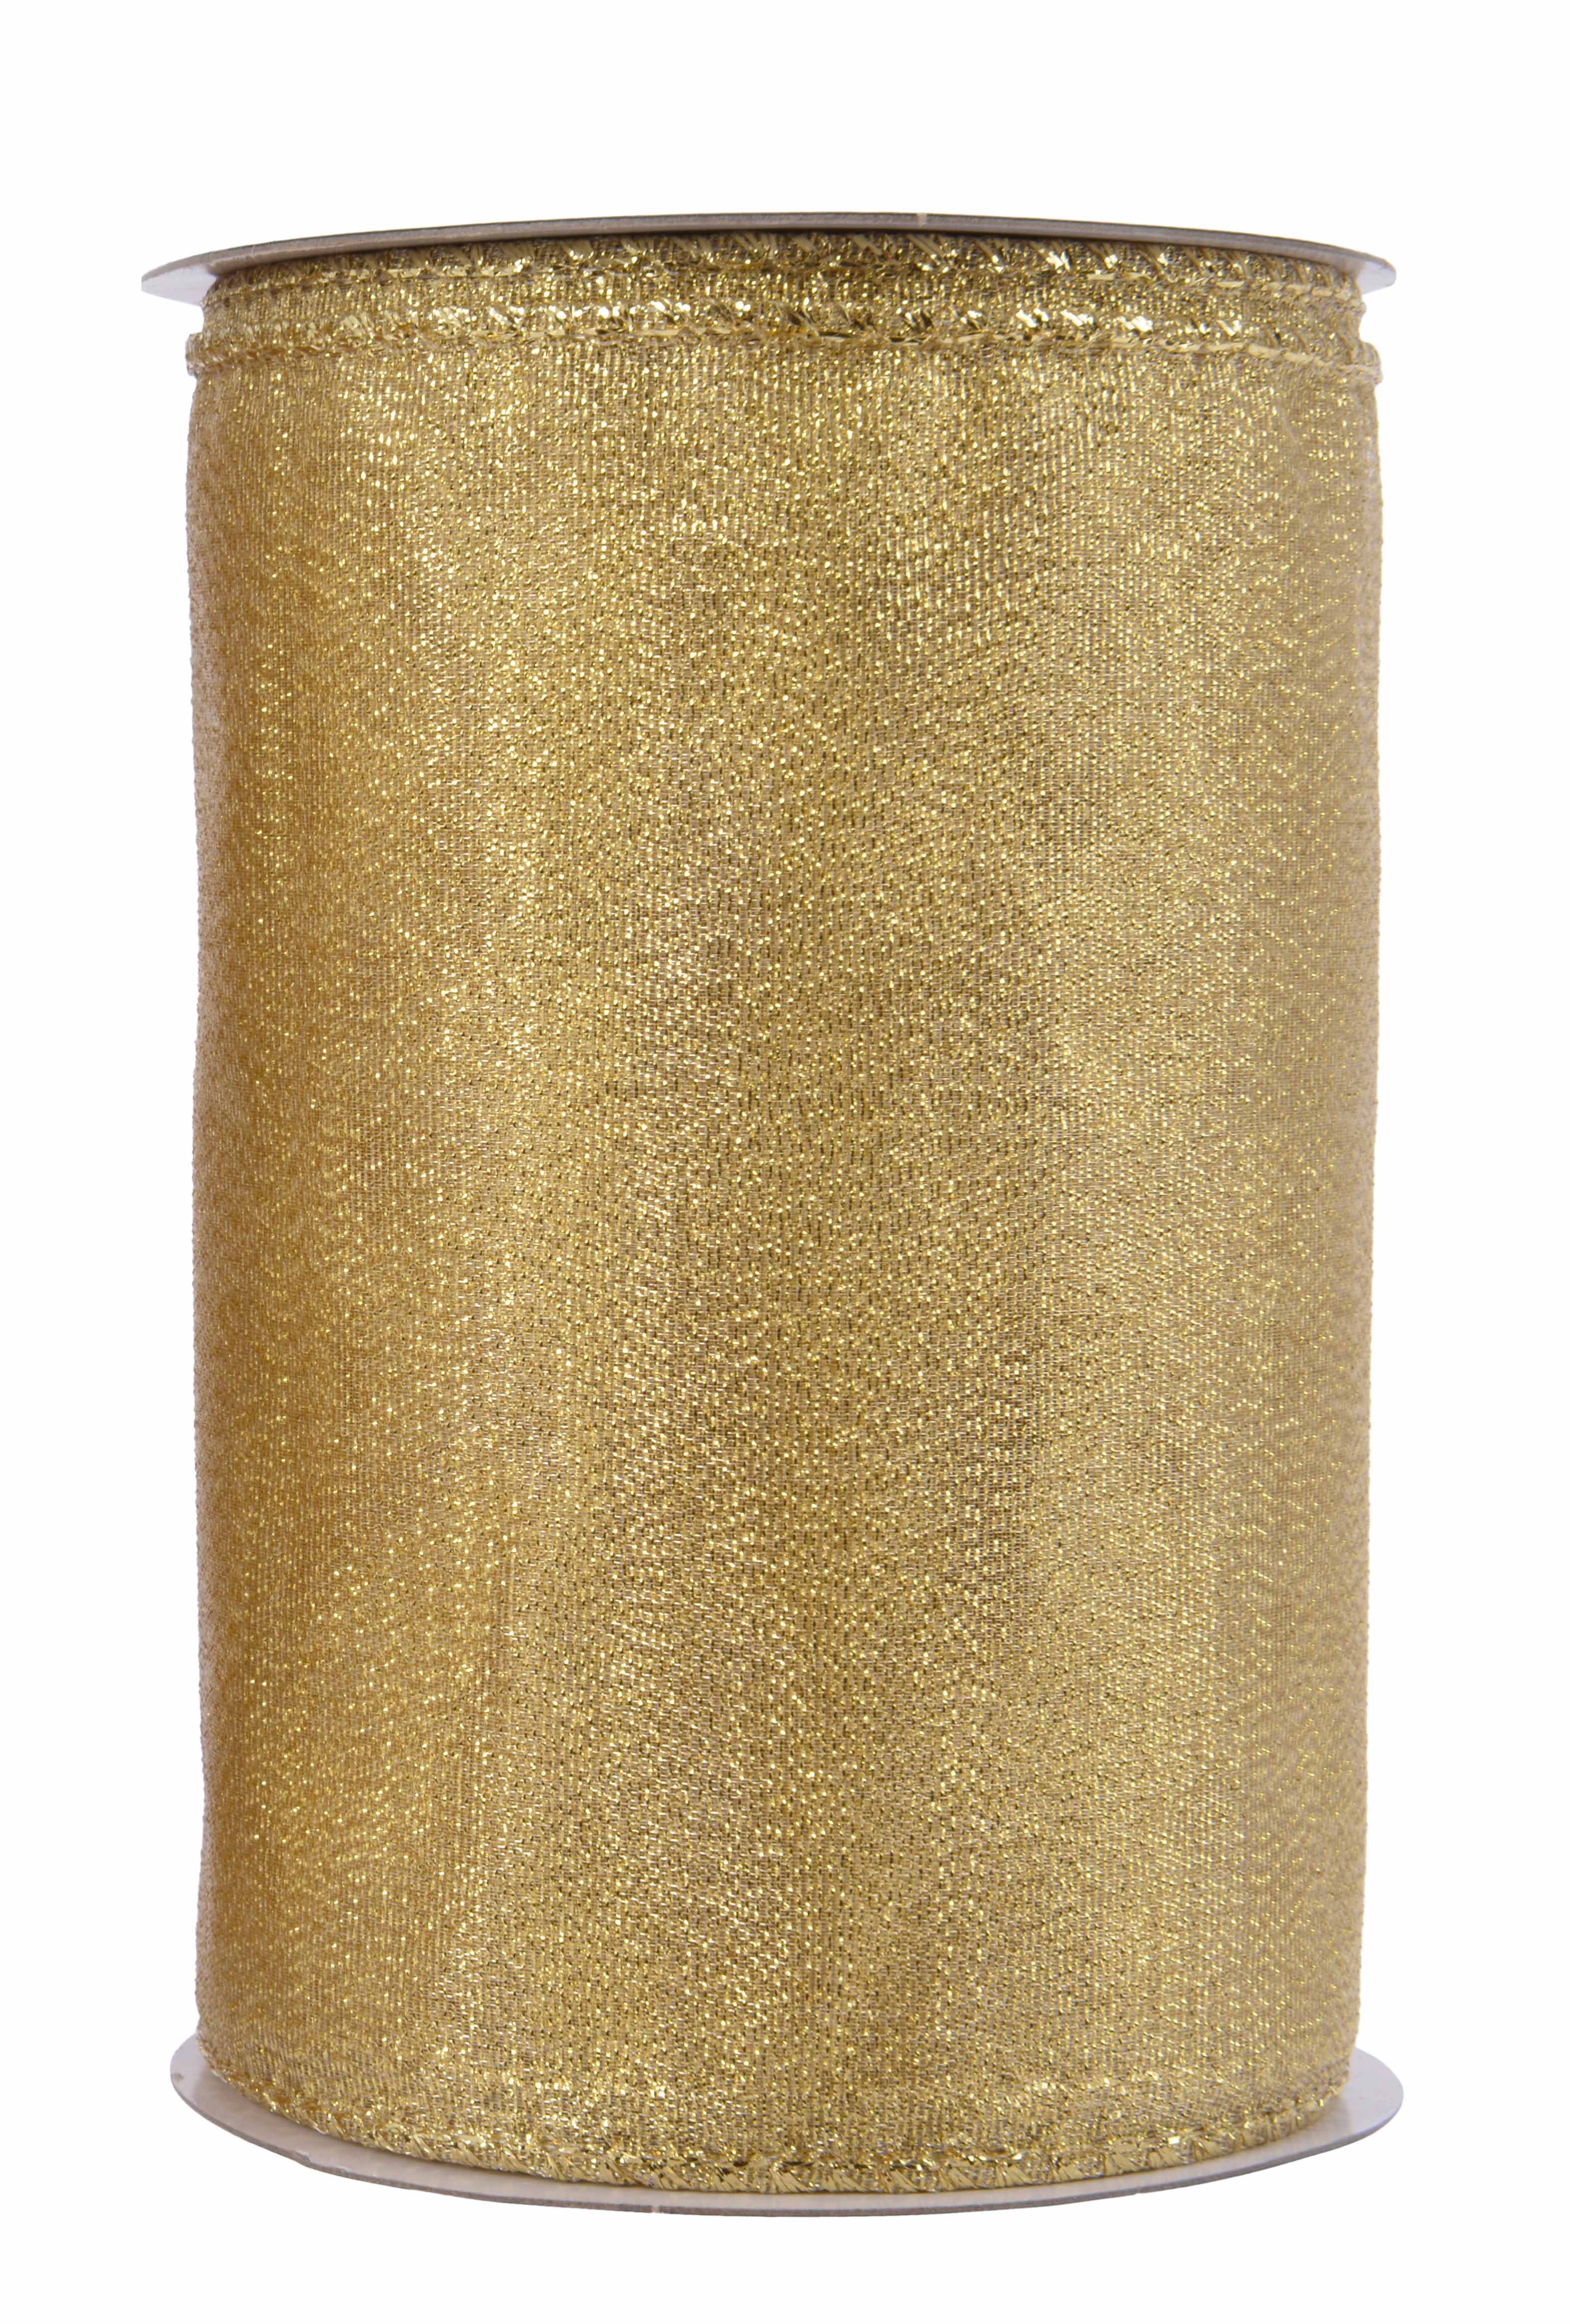 Stoffband gold Drahtkante 12,7x270cm